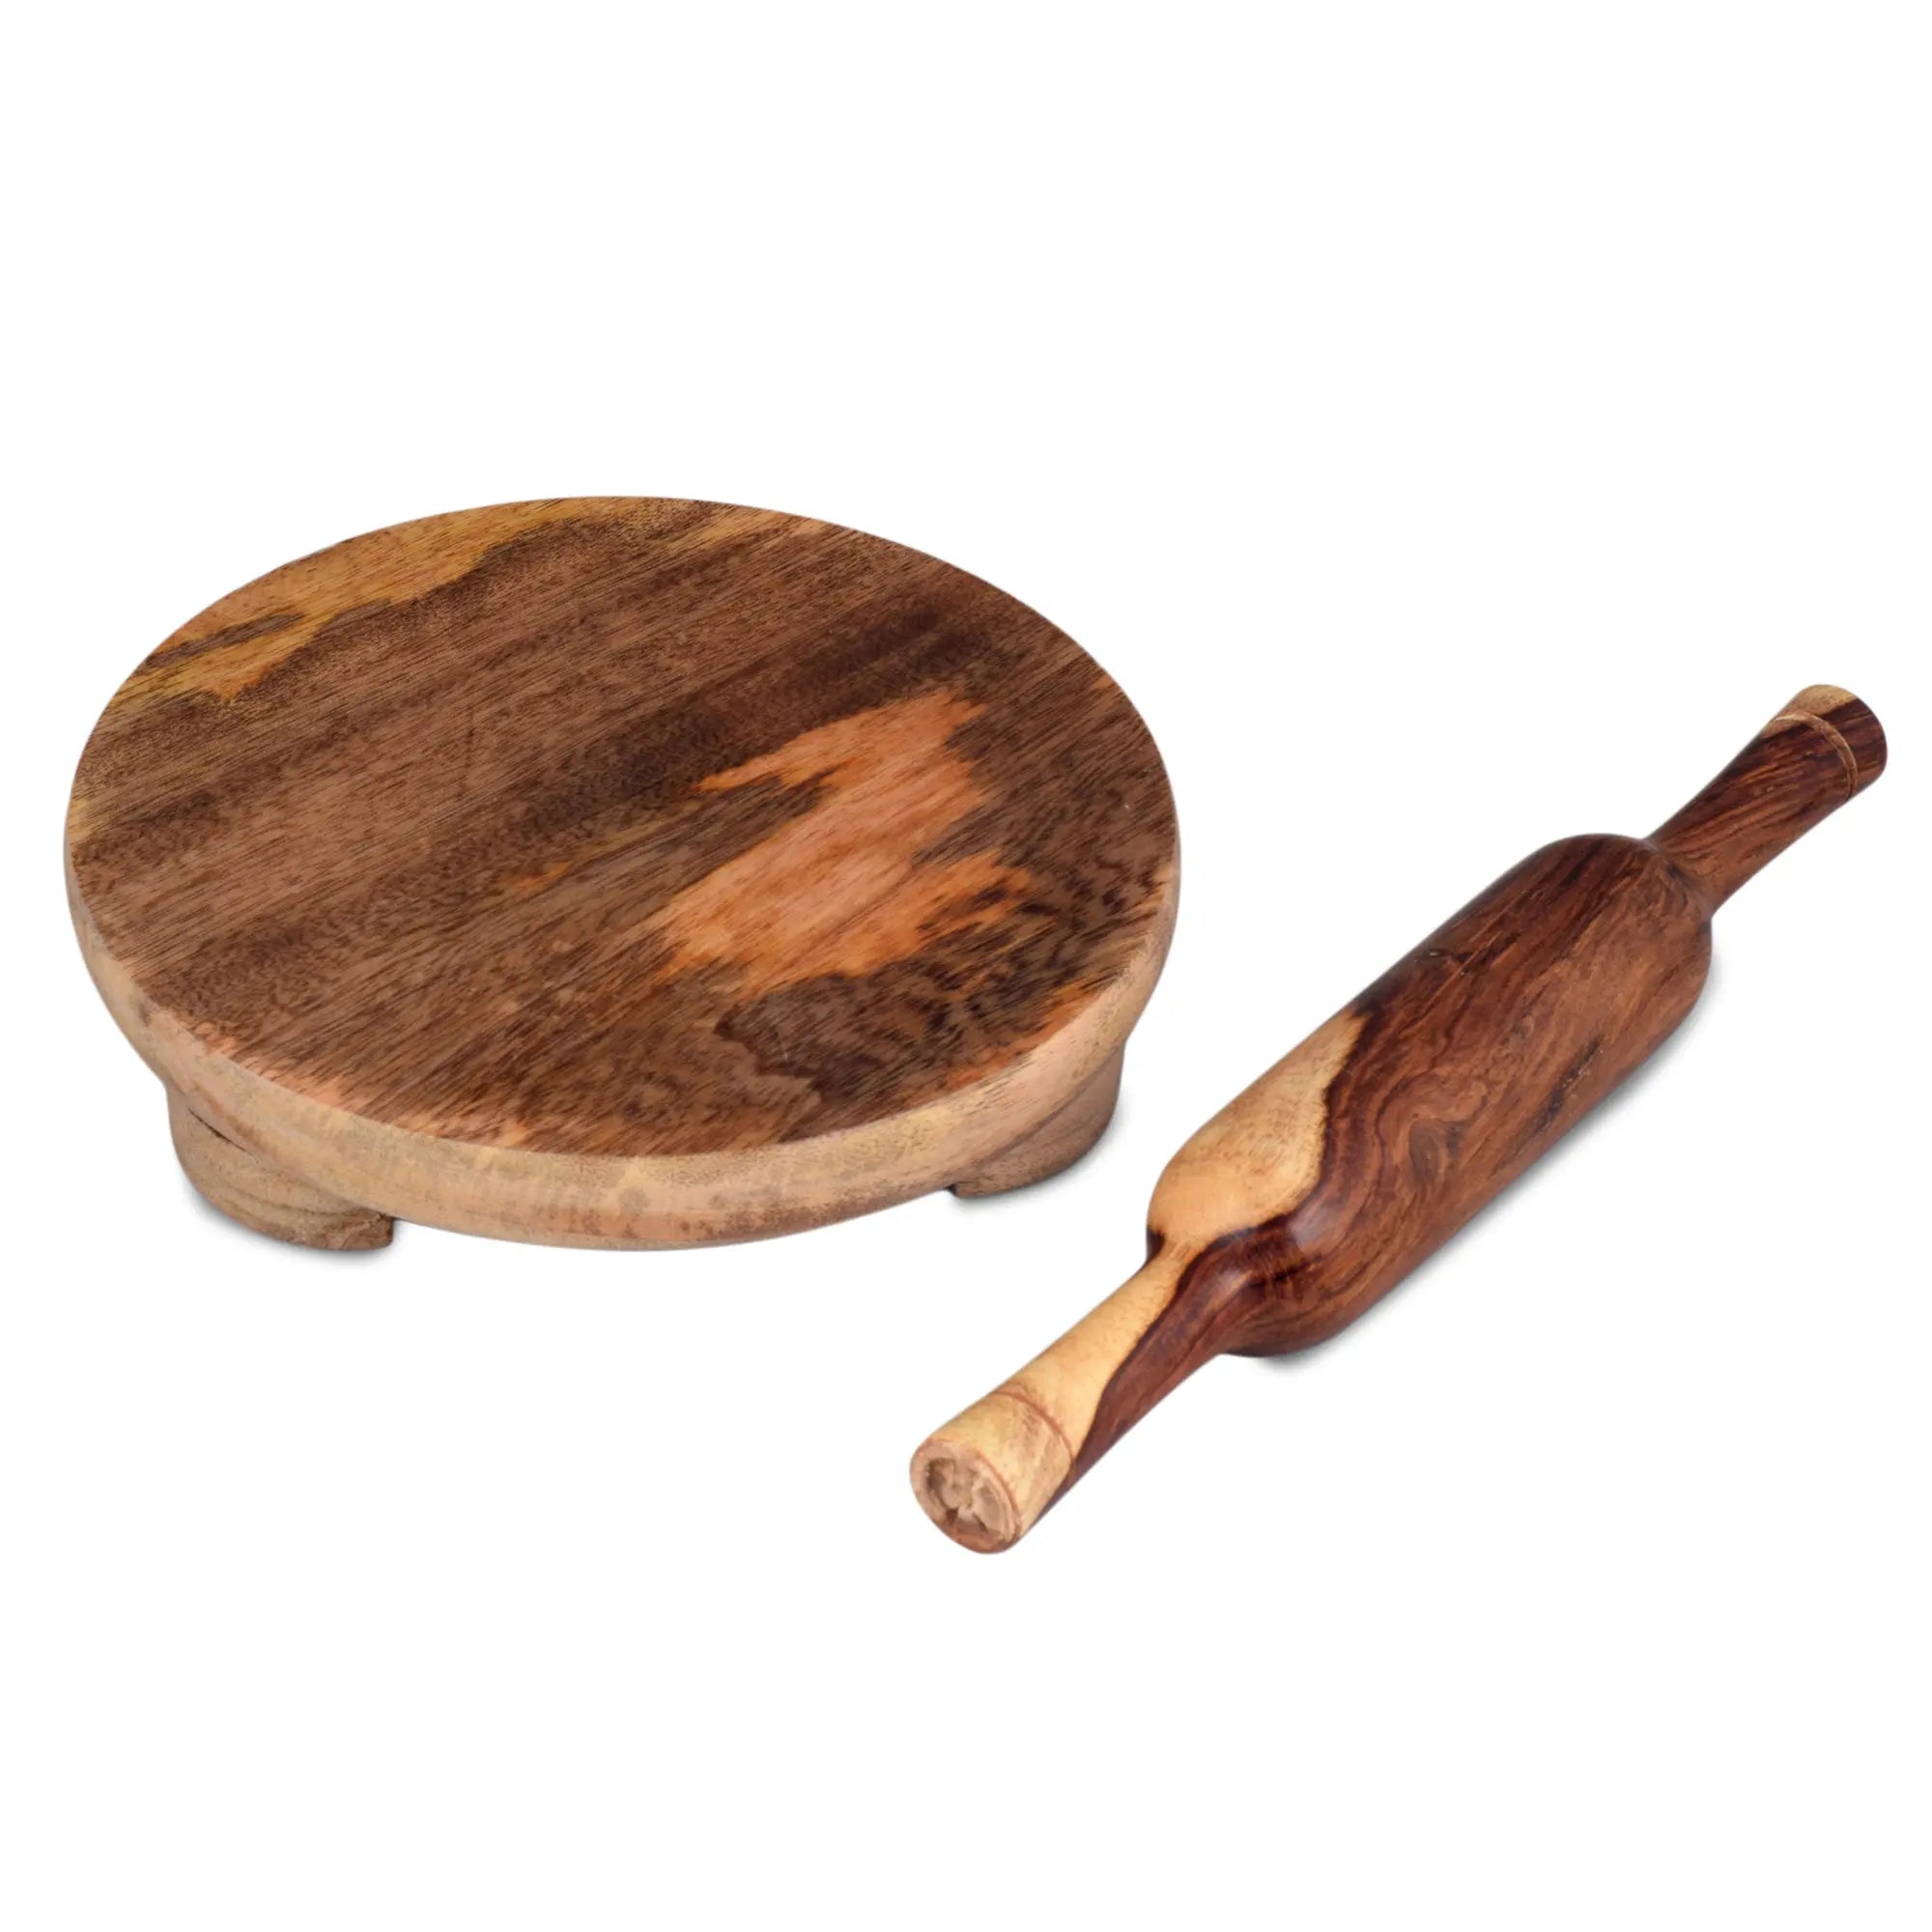 Crockery Wala & Company Pure Sheesham Wooden Handmade Rolling Pin and Board Set - CROCKERY WALA AND COMPANY 